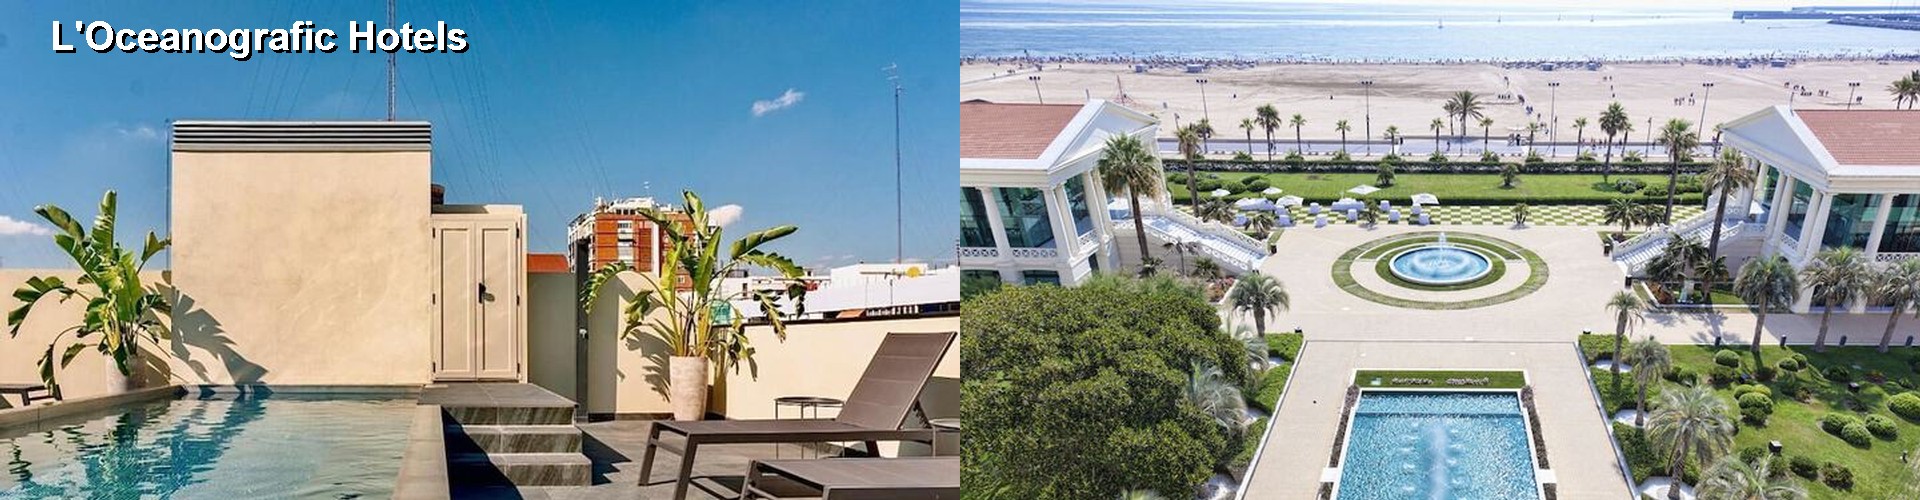 5 Best Hotels near L'Oceanografic